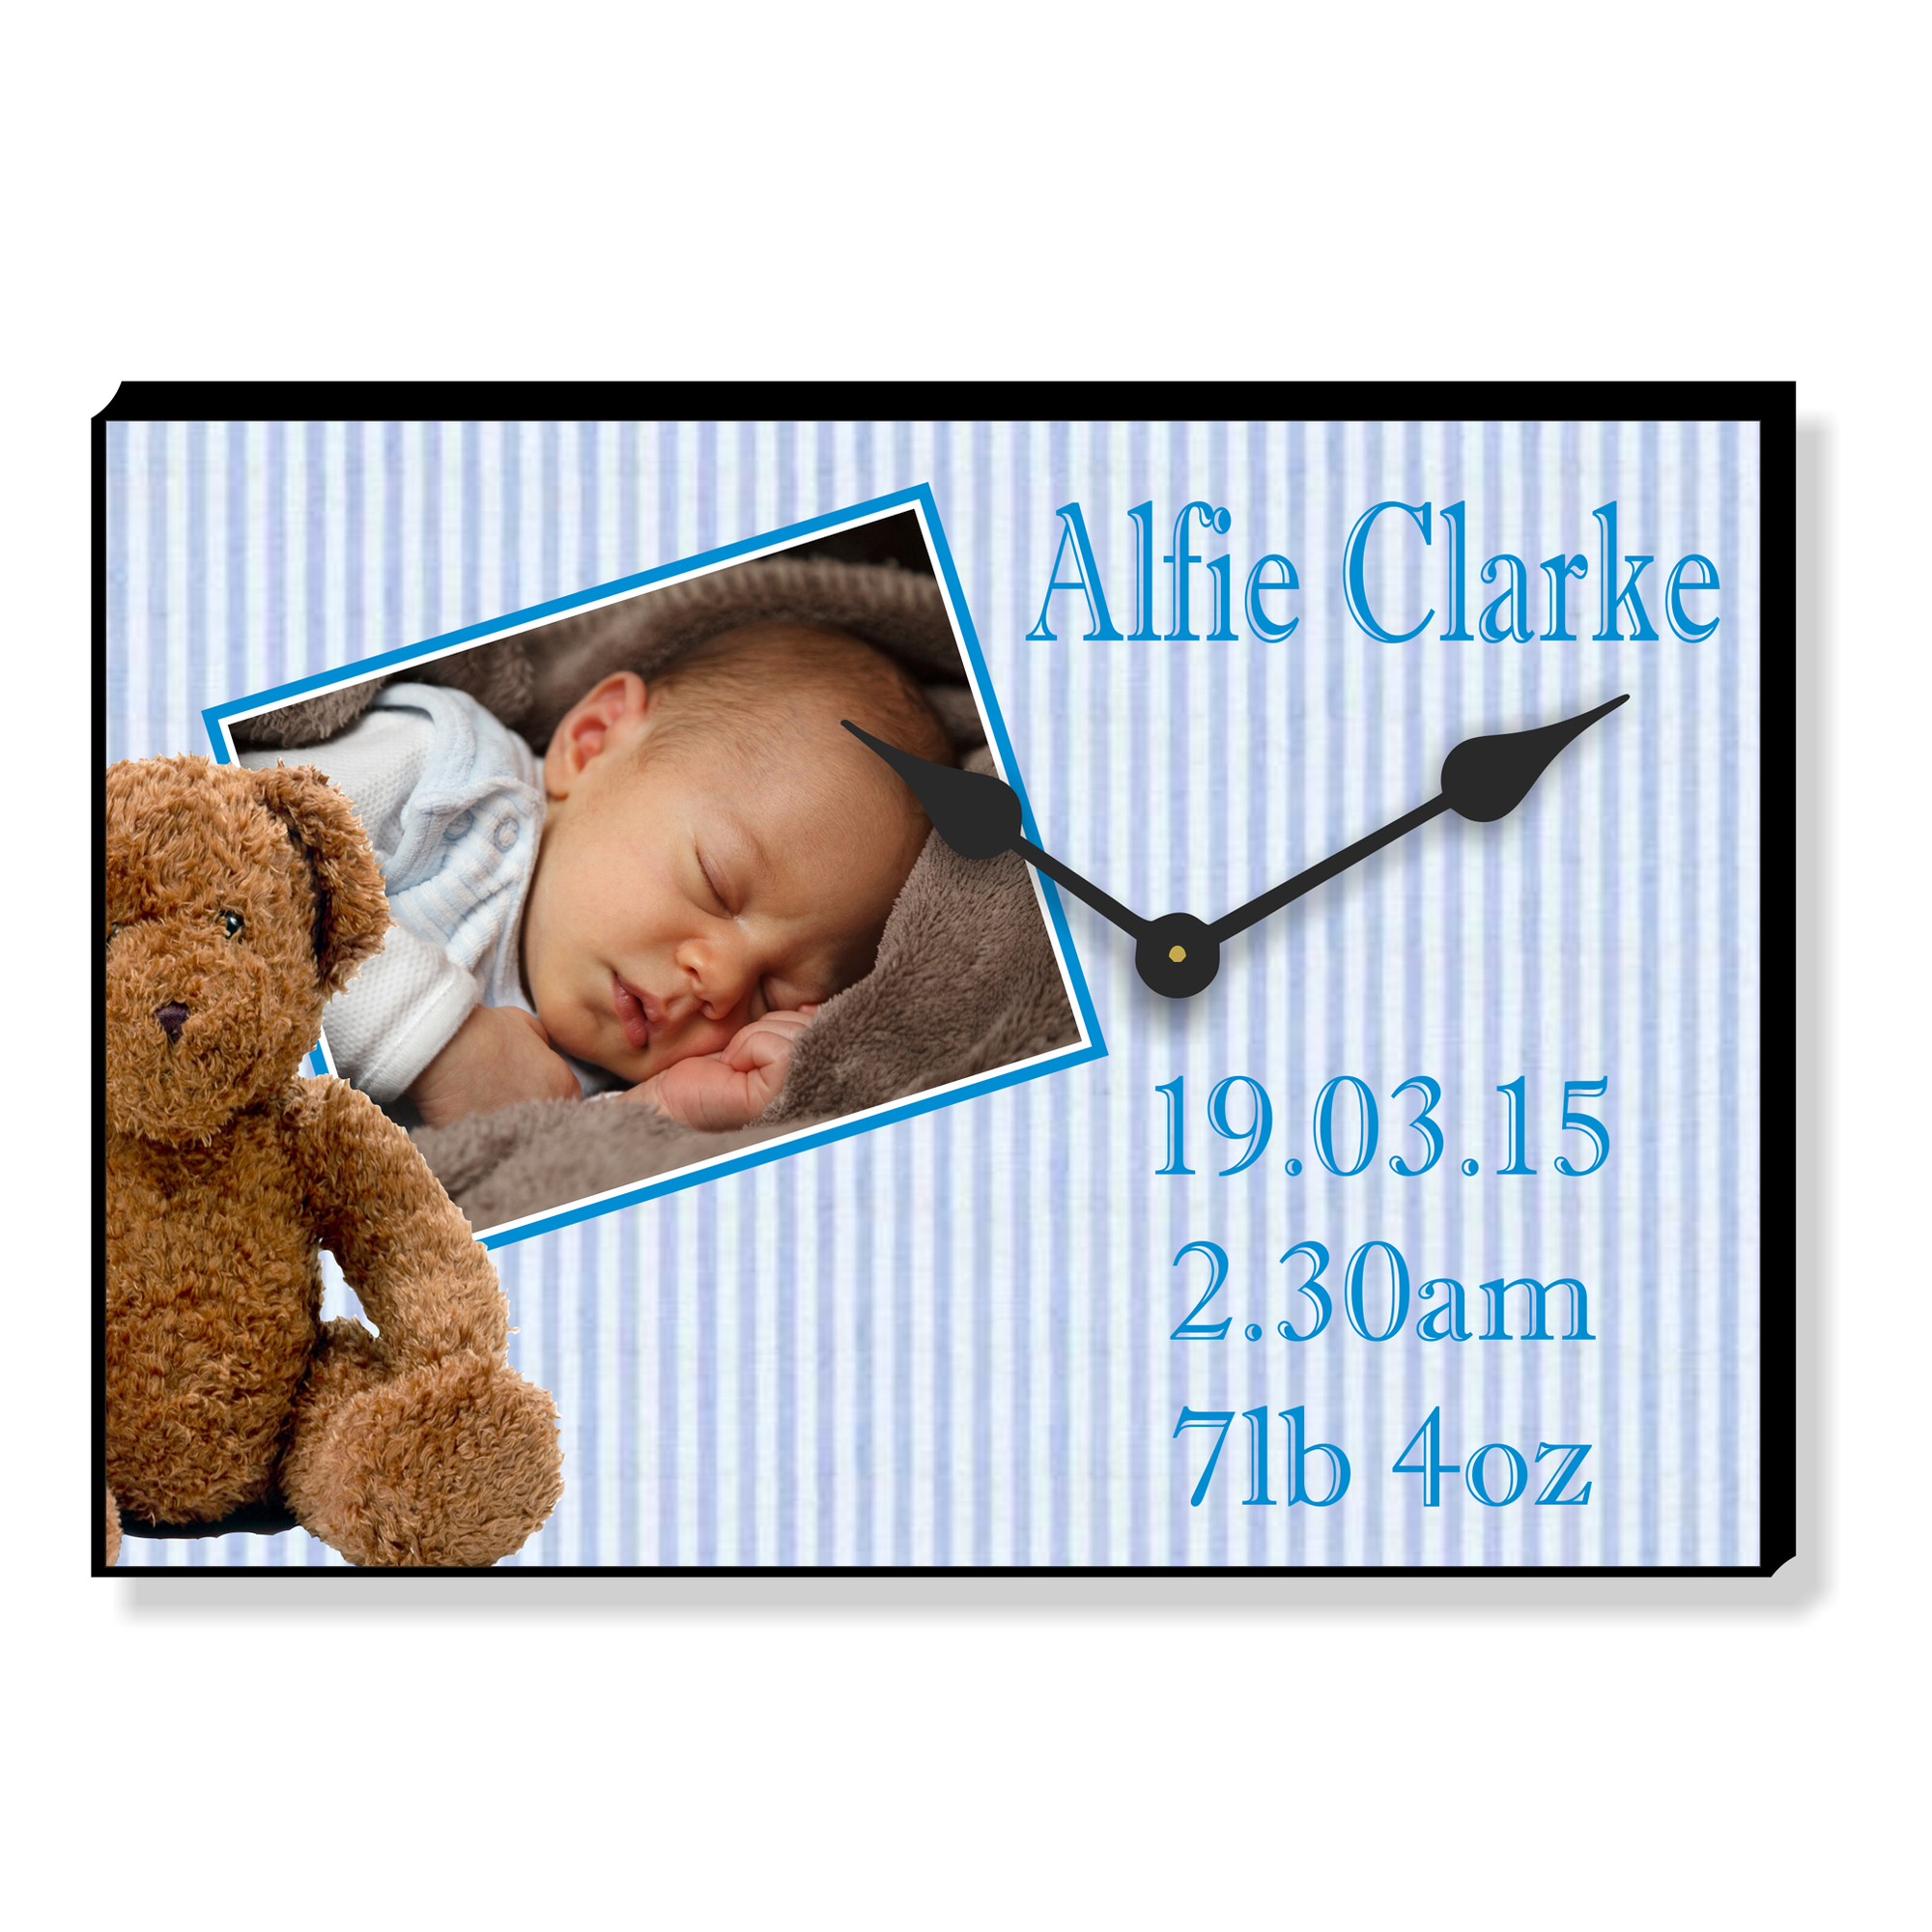 Personalised Baby Clock - Personalise It